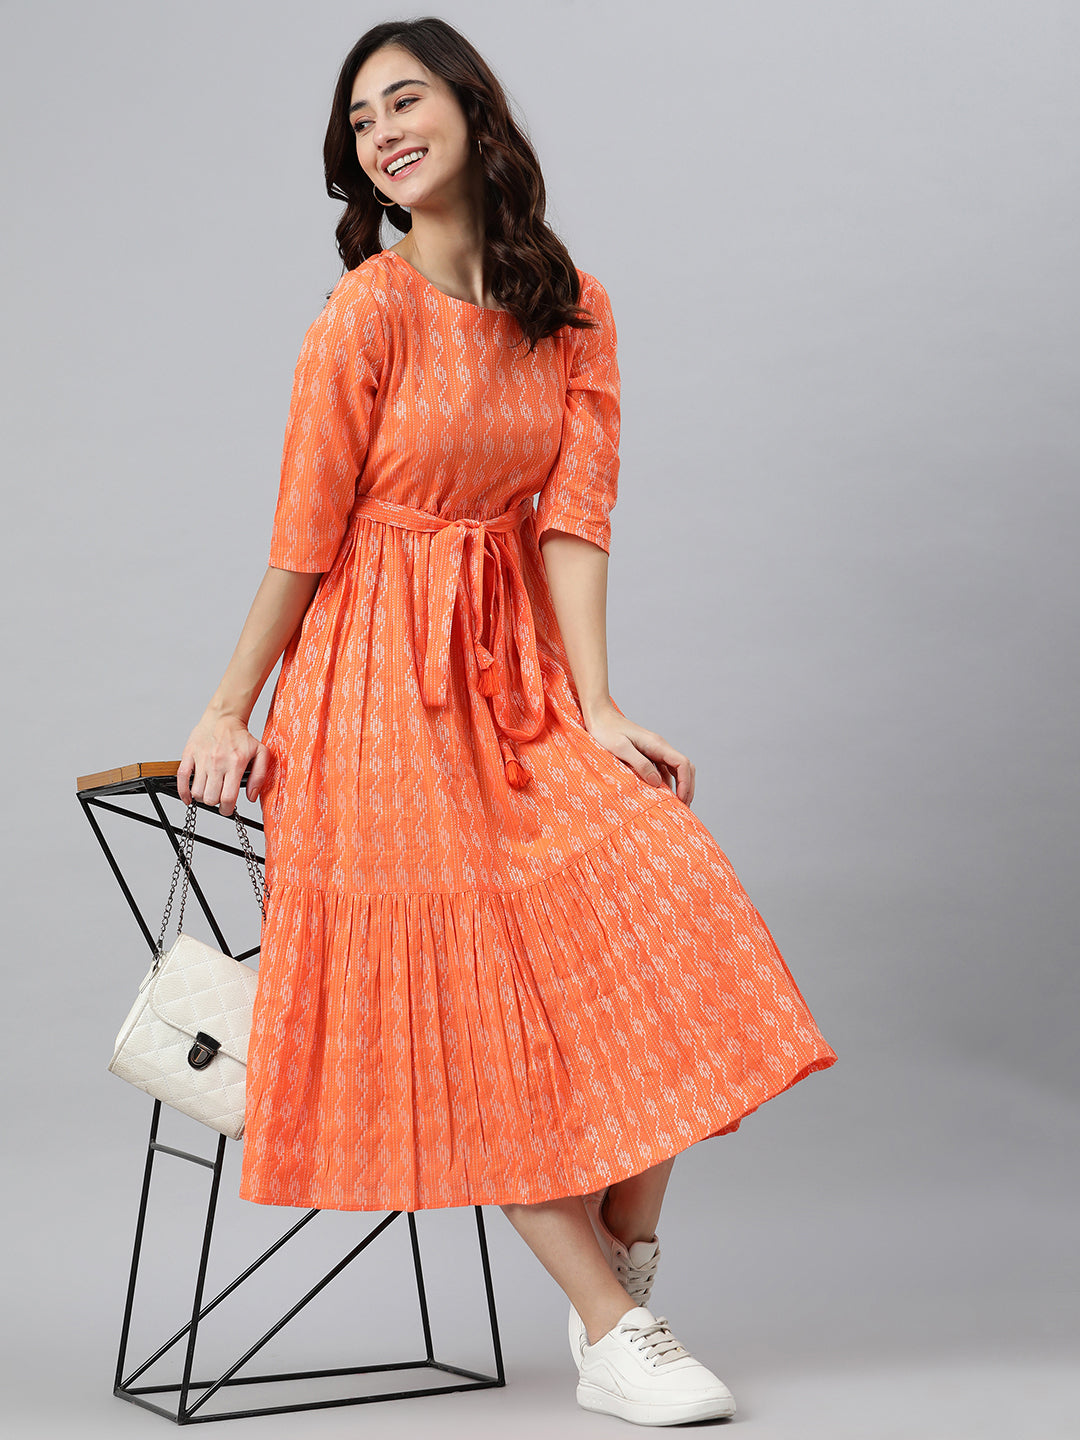 Women's Woven Design Orange Cotton Dress - Janasya